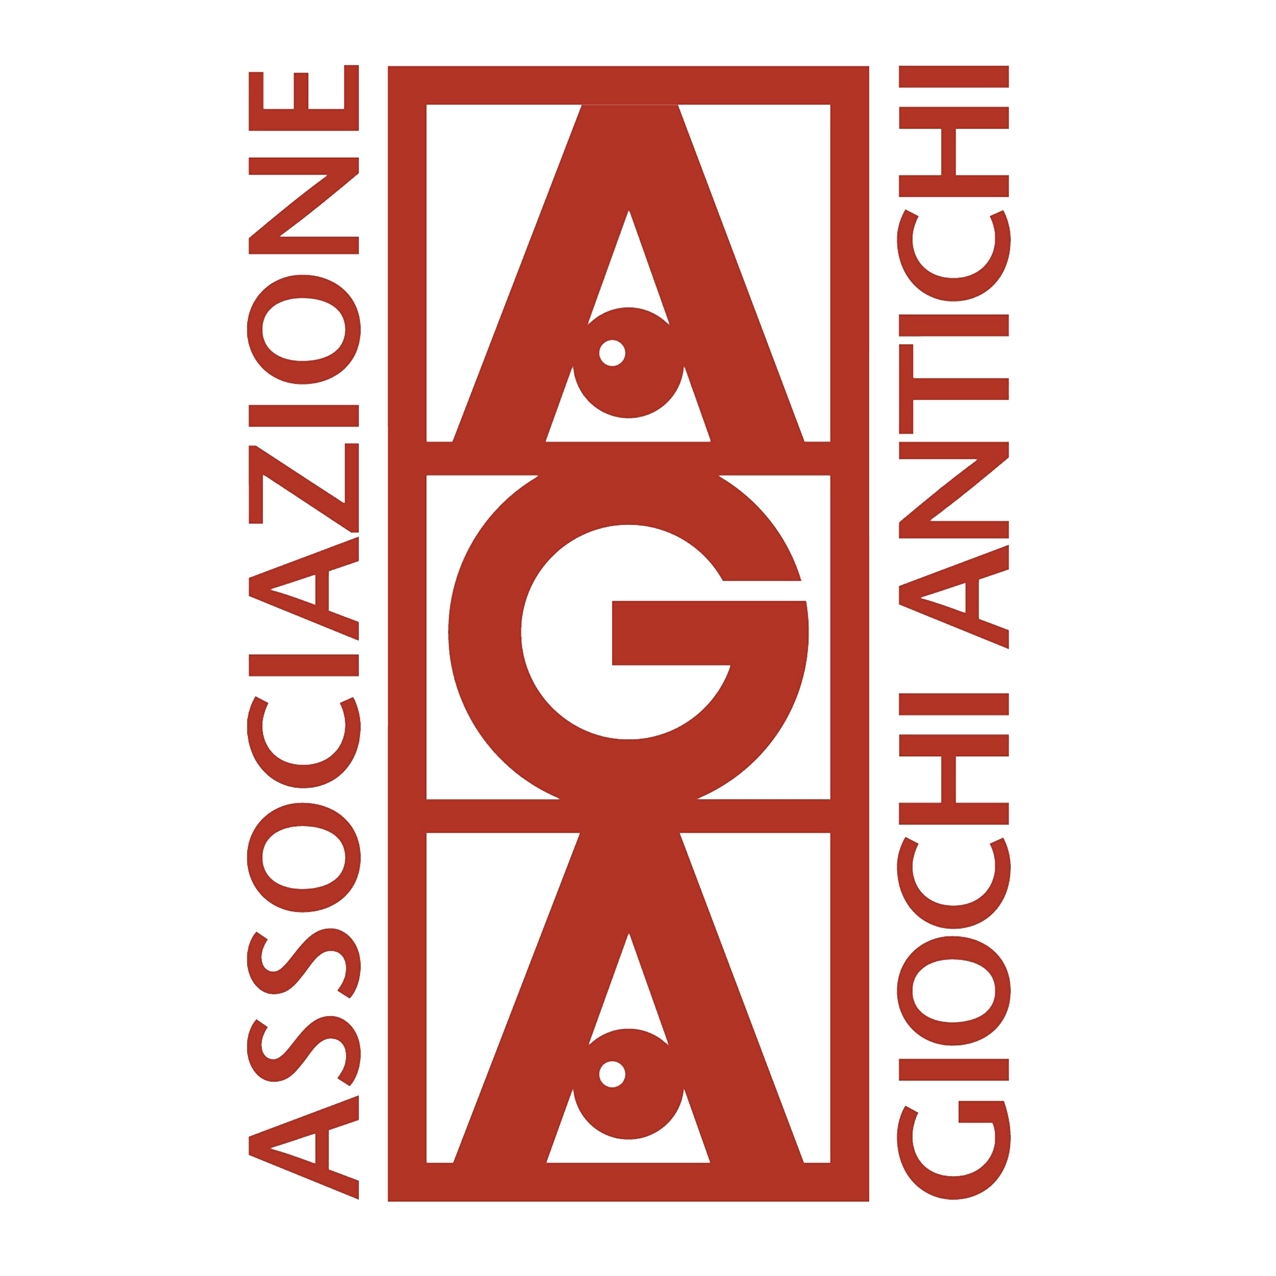 AGA - Associazione Giochi Antichi